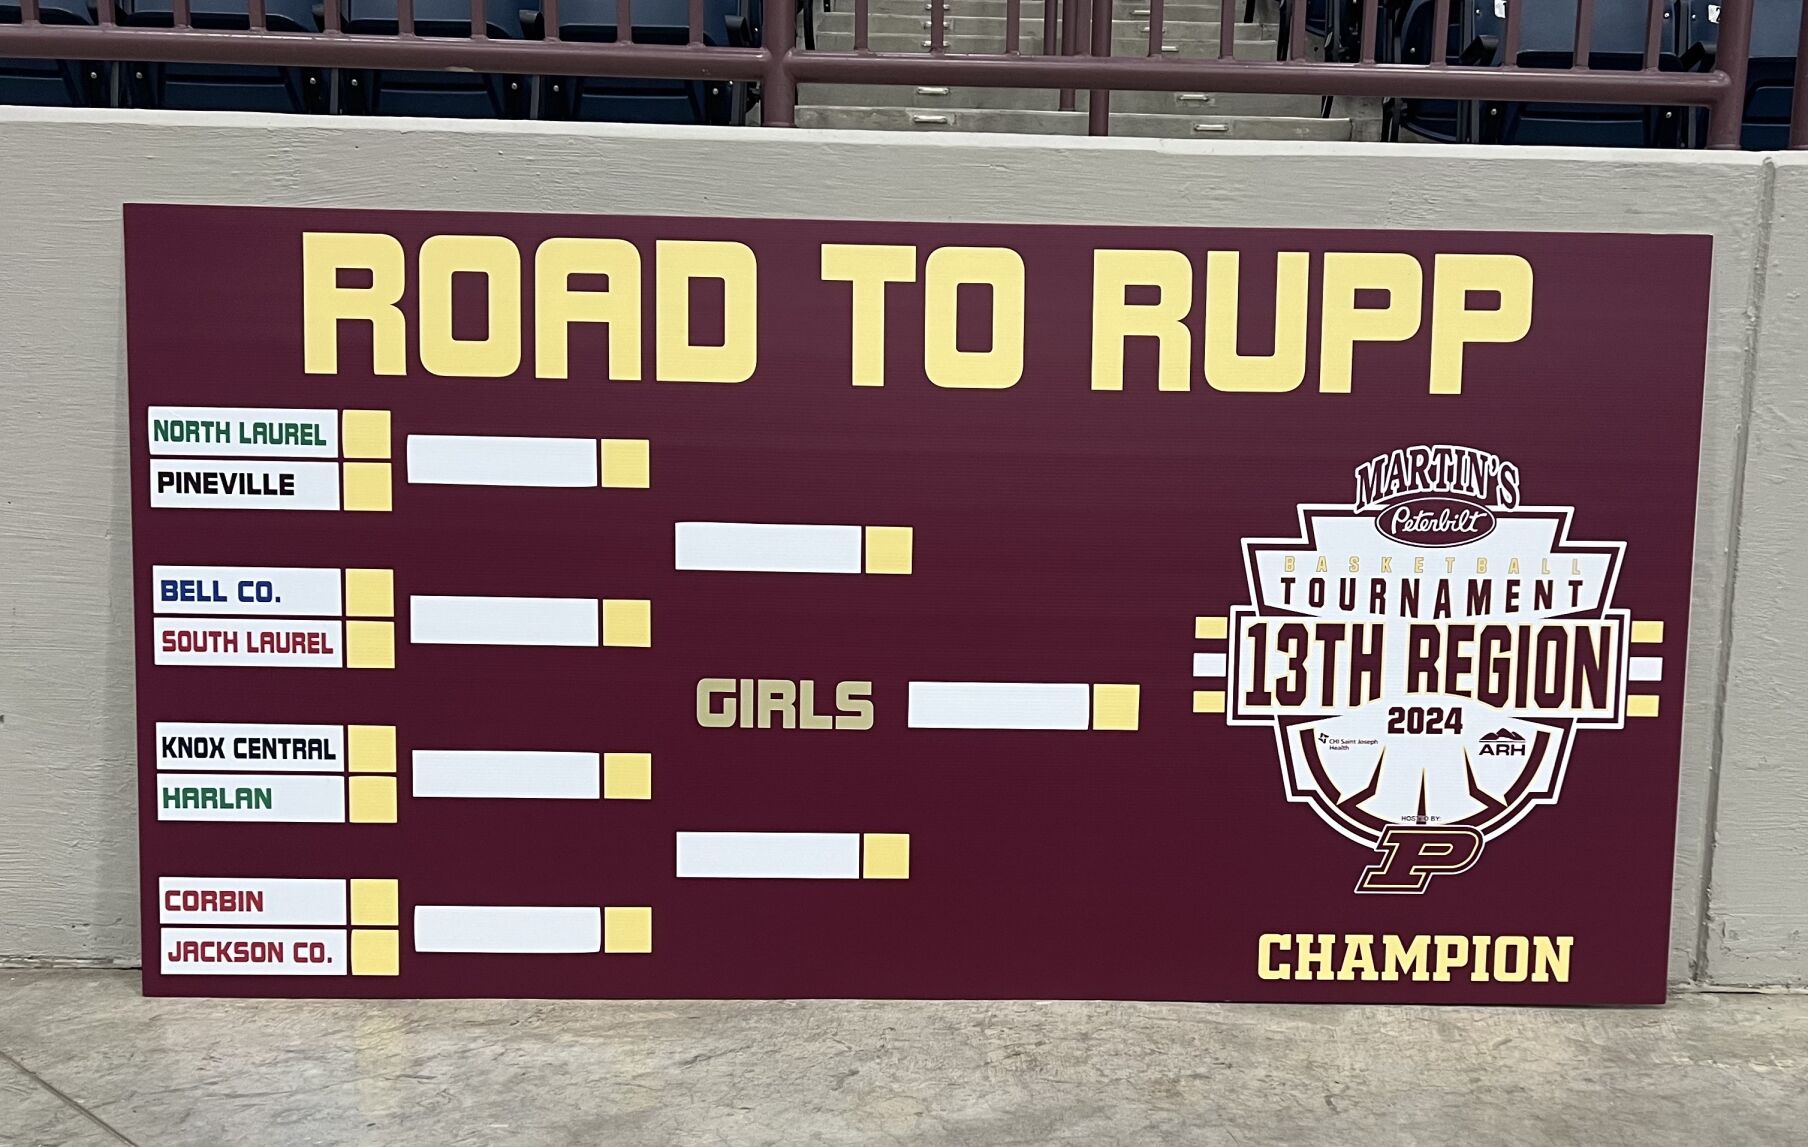 13th Region Girls’ Tournament at the Corbin Arena